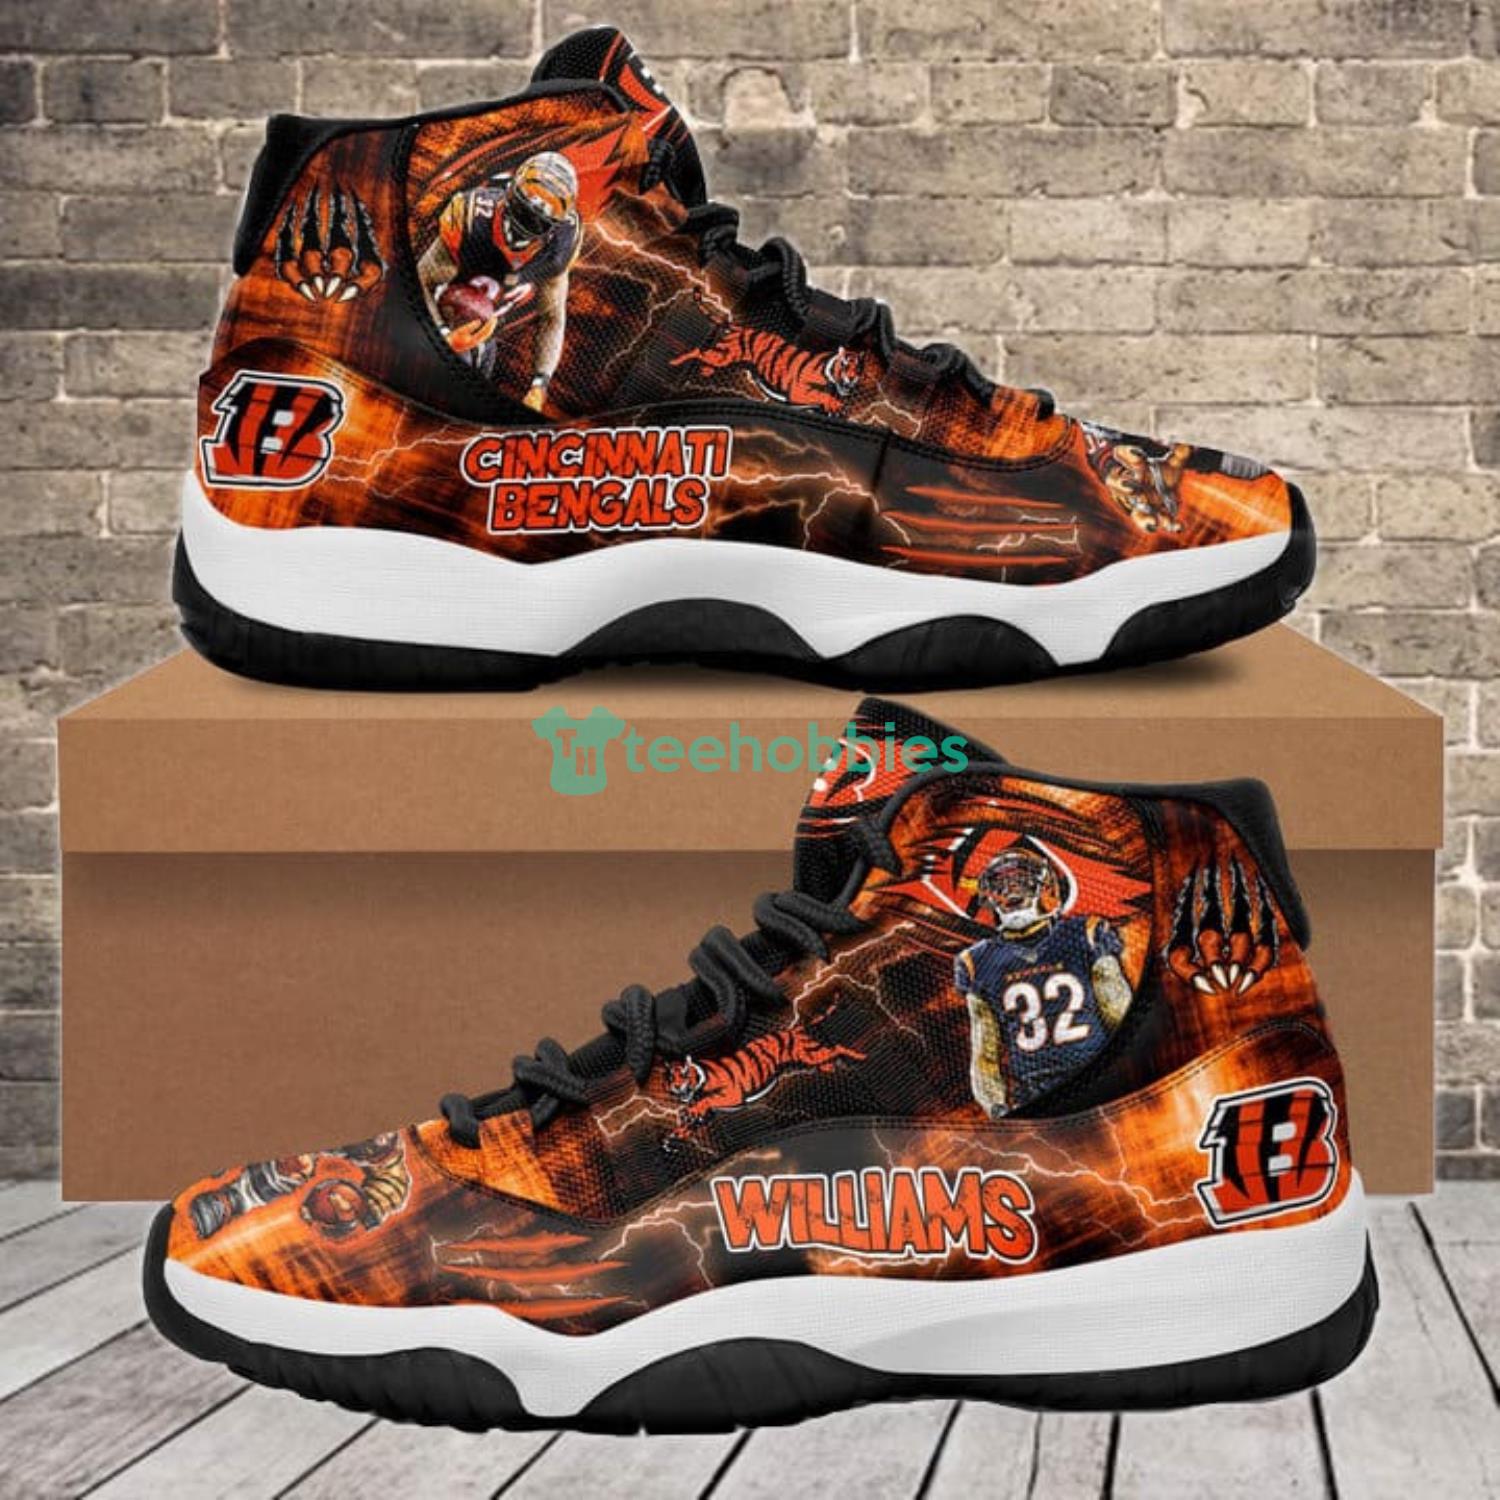 Cincinnati Bengals Trayveon Williams Air Jordan 11 Shoes Sneaker For Fans Product Photo 1